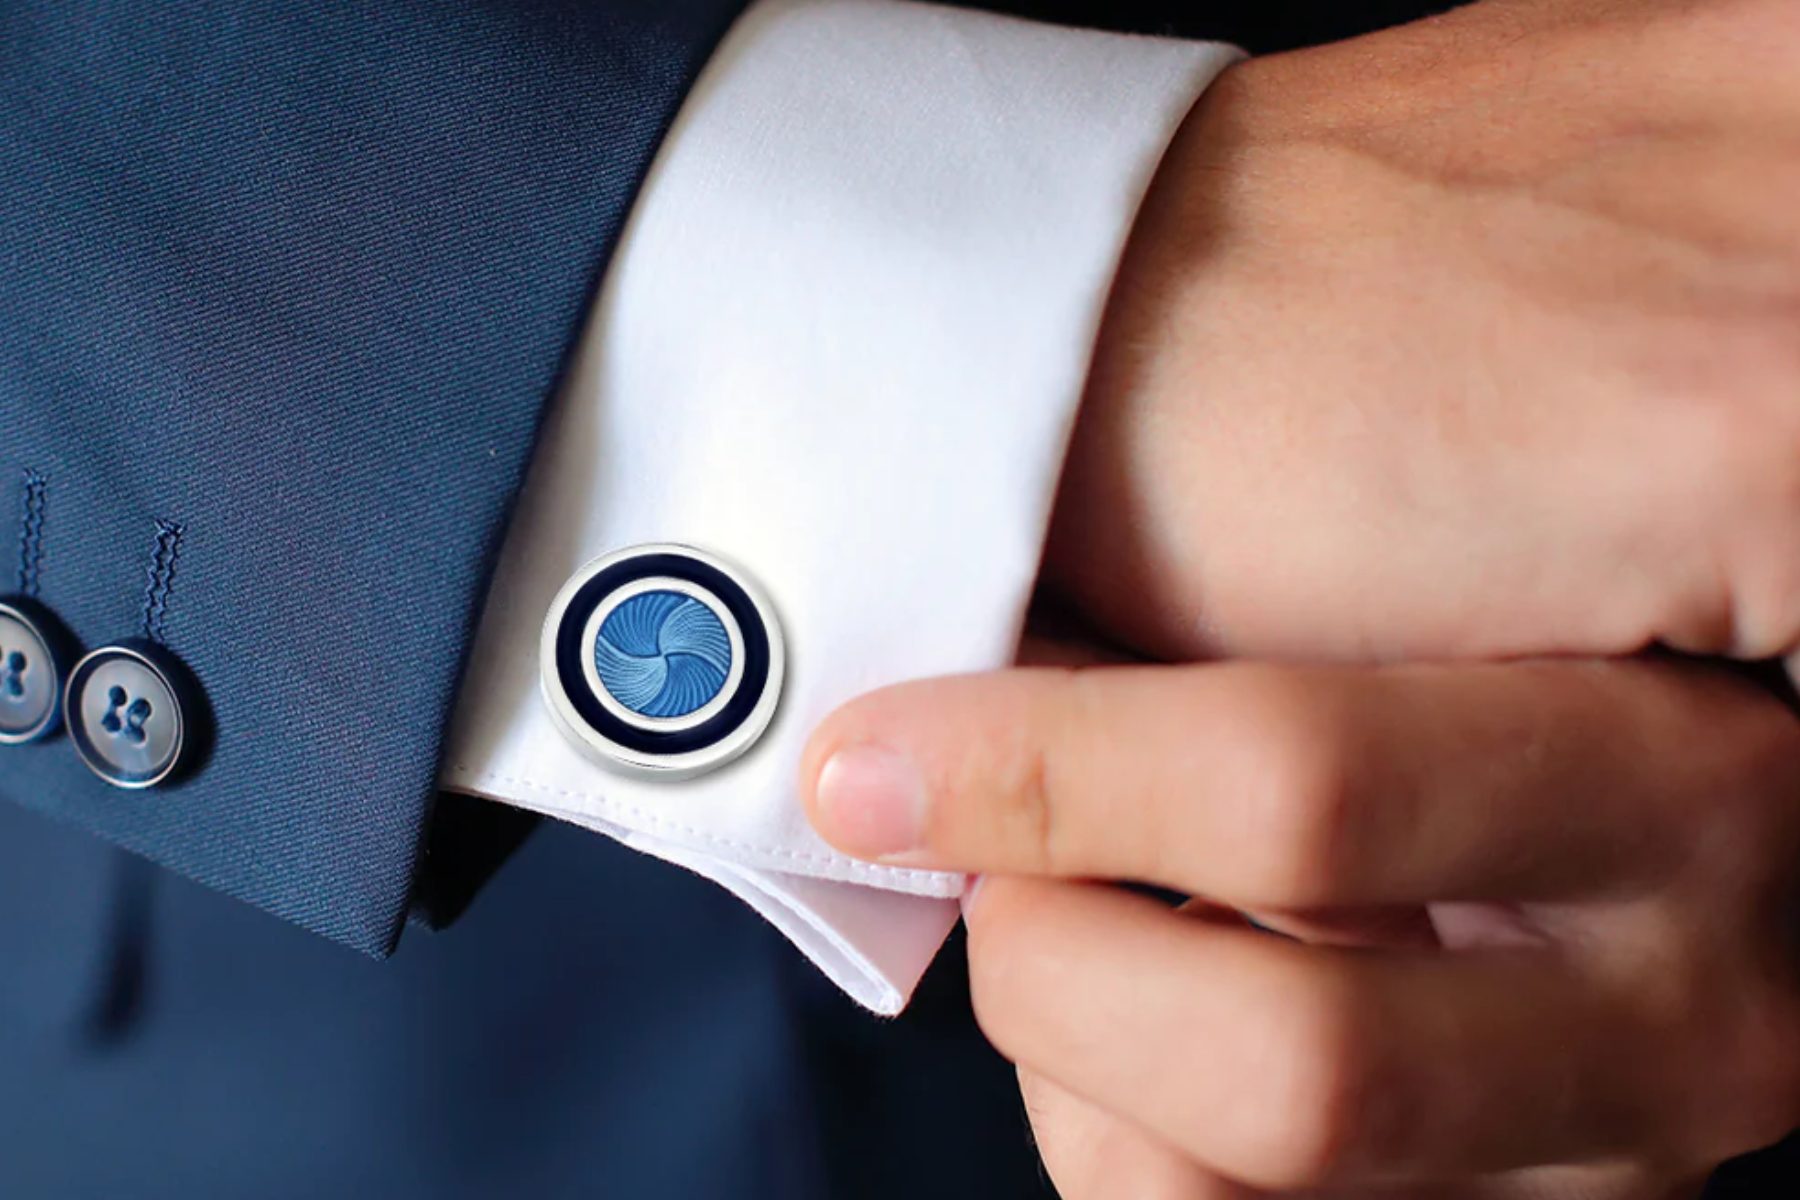 A man attaches a cufflink made of blue enamel